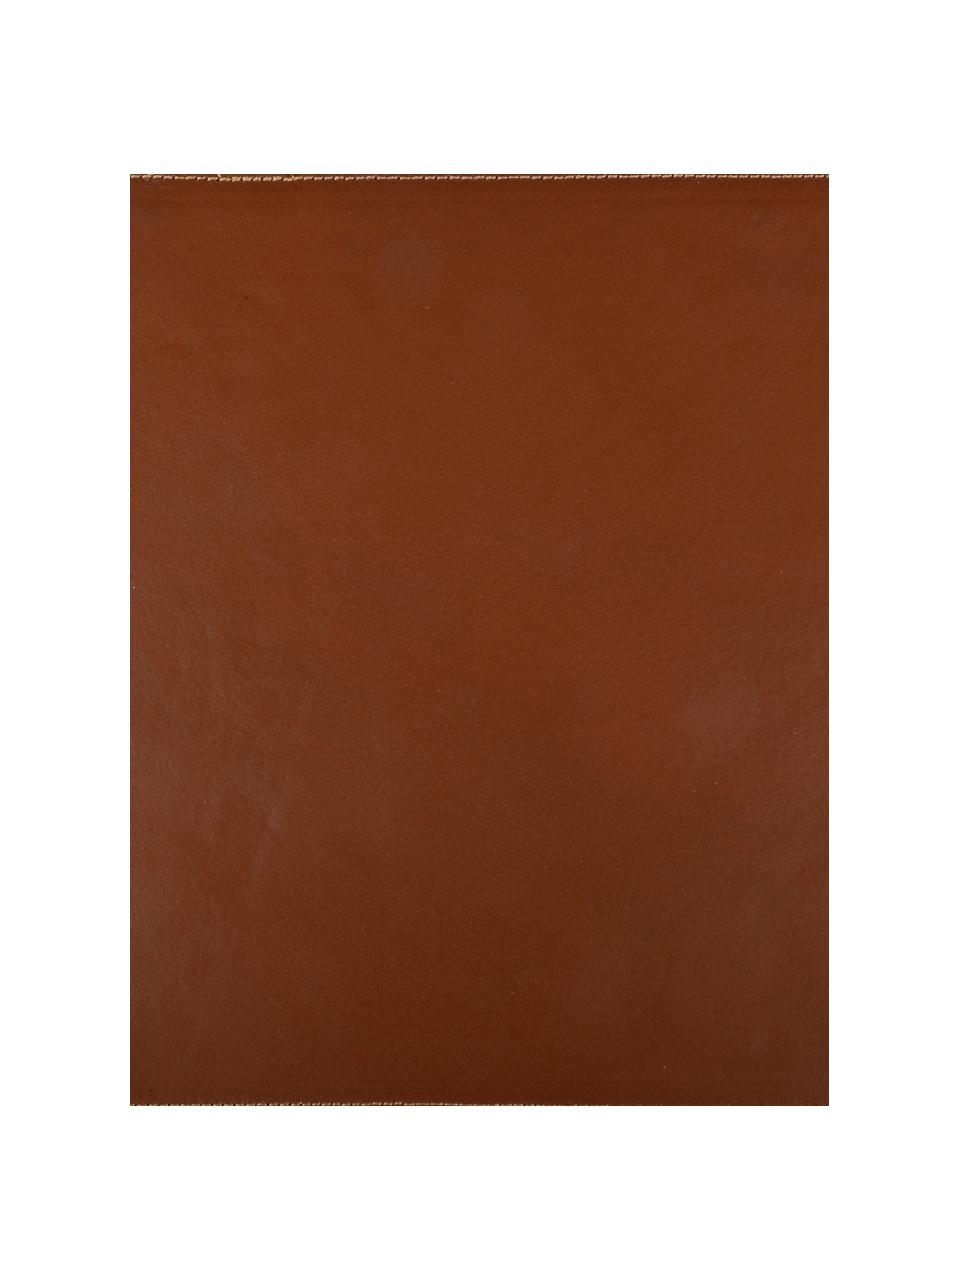 Kunstleder-Tischset Bina, Kunstleder, Cognac, 30 x 45 cm